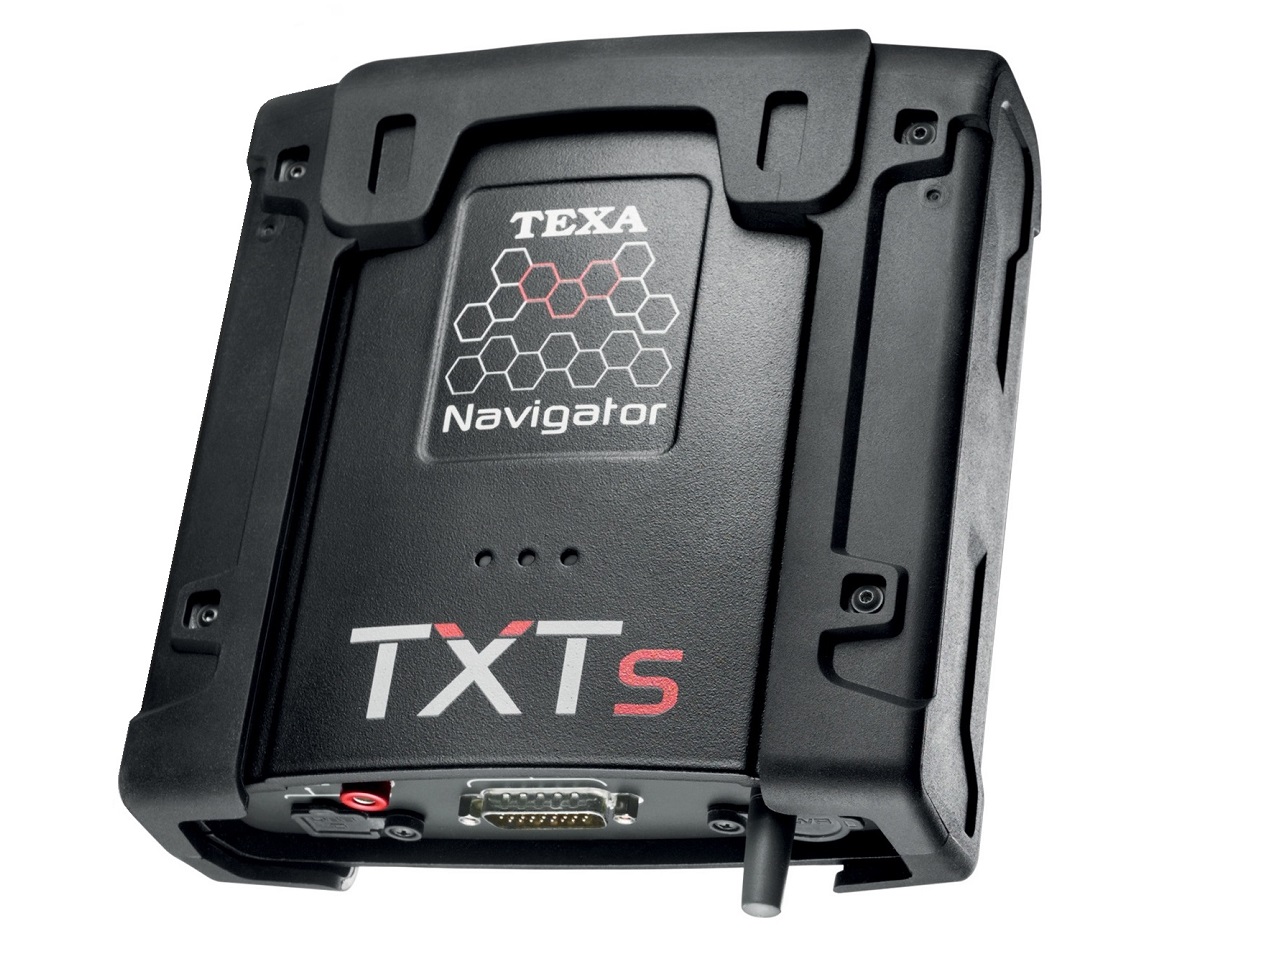 Texa Navigator TXTs truck diagnose for PC